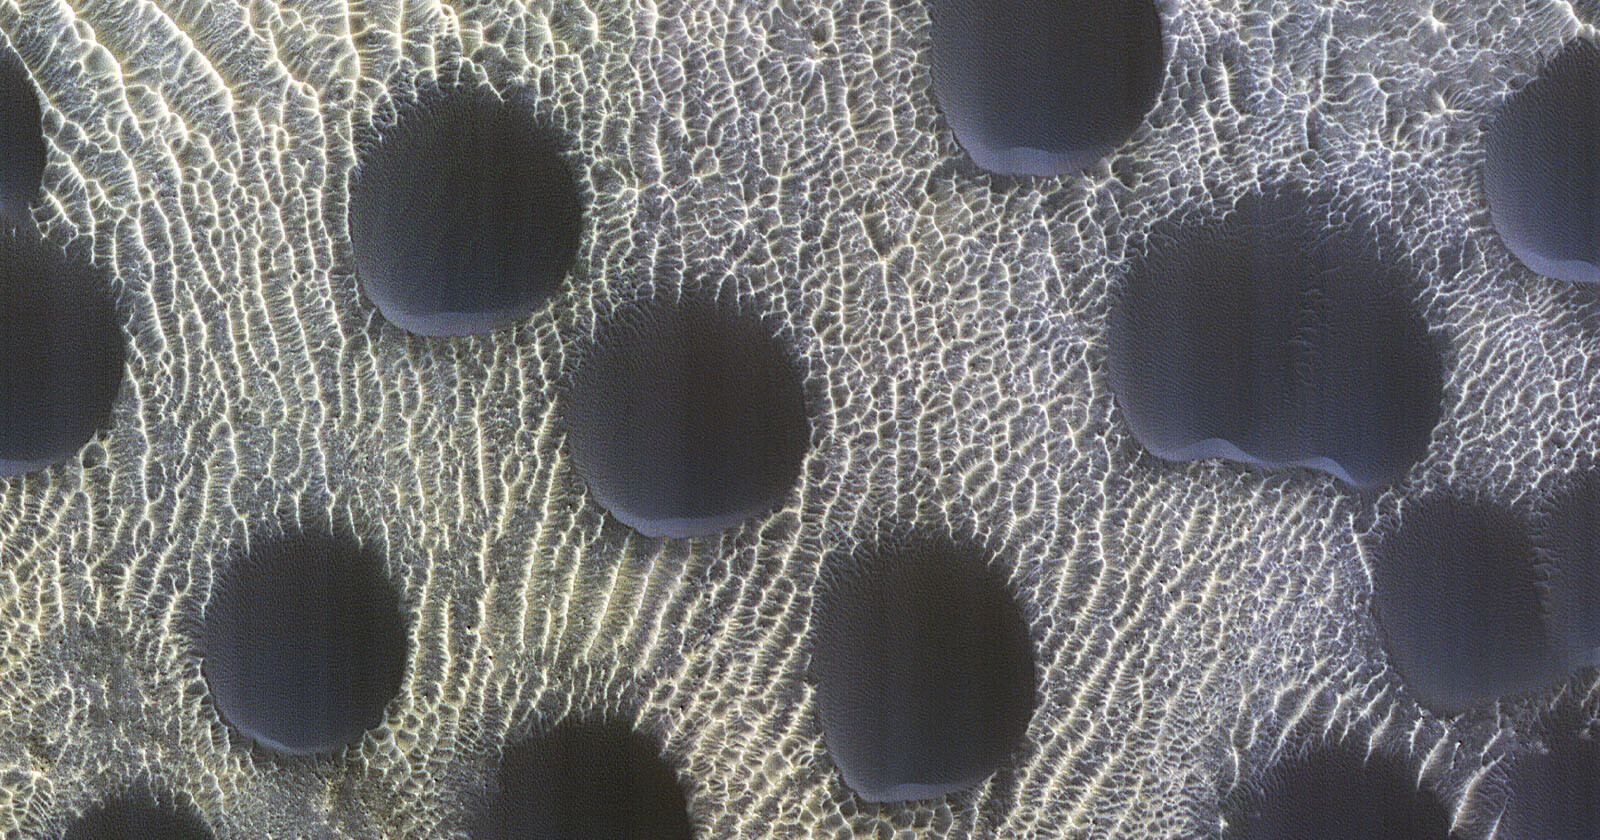 NASA Release Photos of Strange Circular Sands Dunes on Mars